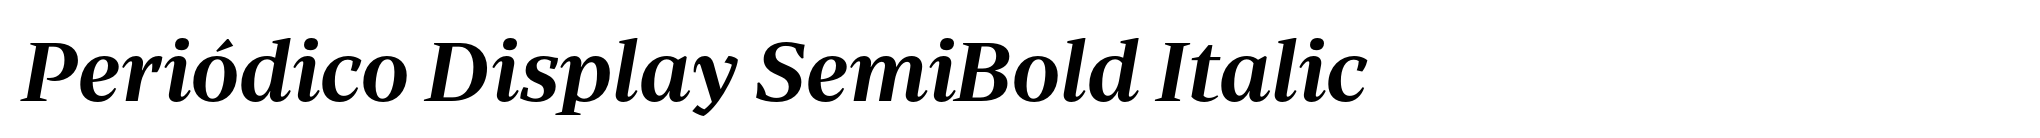 Periódico Display SemiBold Italic image